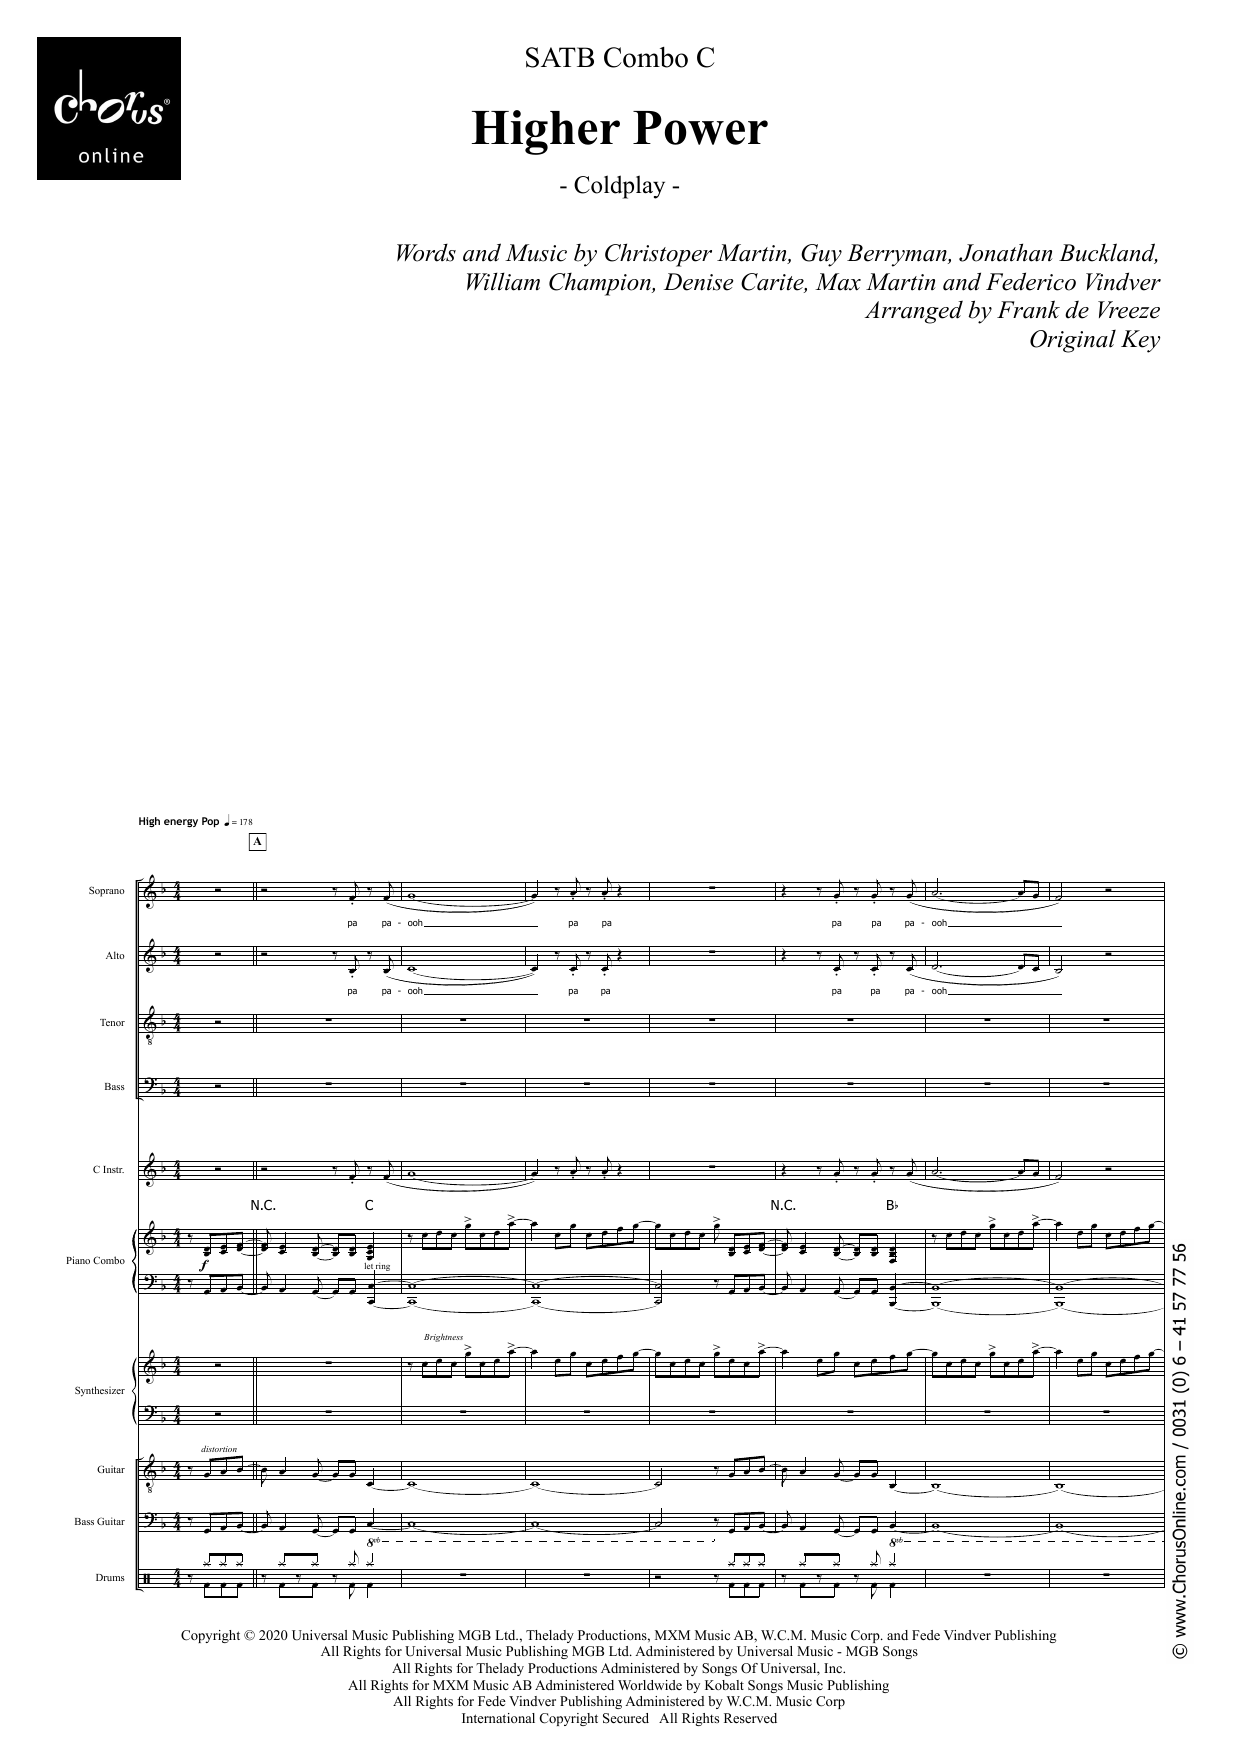 Coldplay Higher Power (arr. Frank de Vreeze) sheet music notes printable PDF score